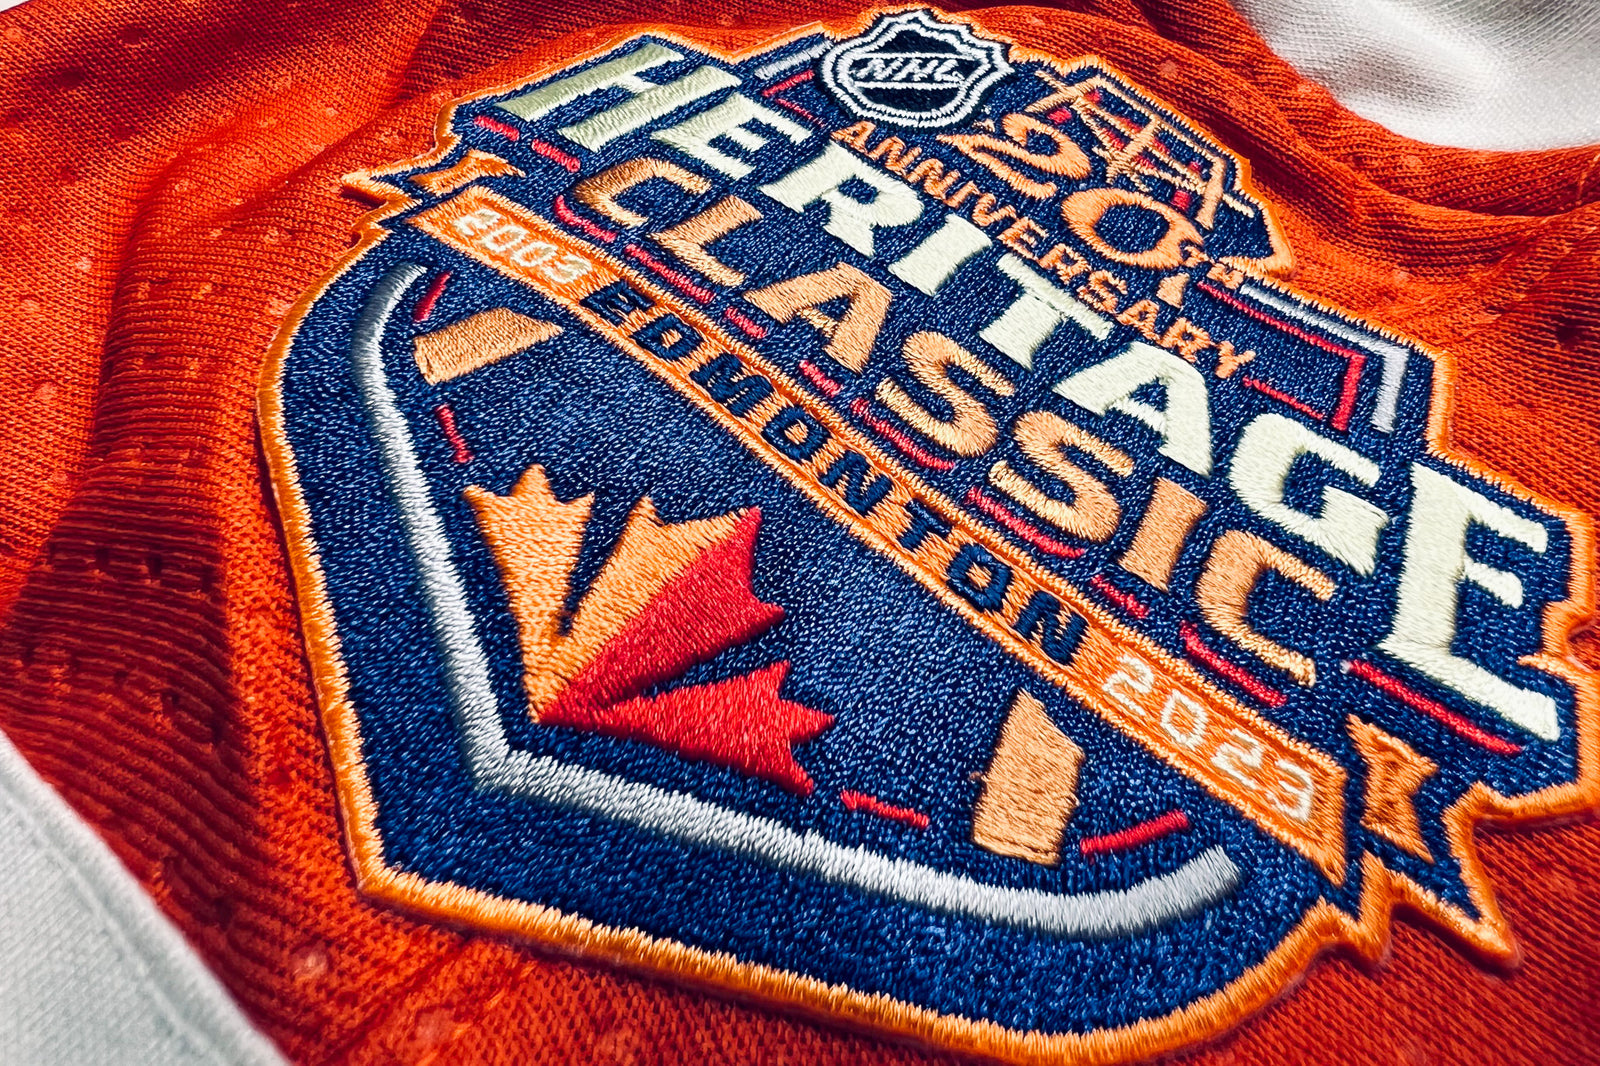 Fanatics Branded Edmonton Oilers Royal 2023 NHL Heritage